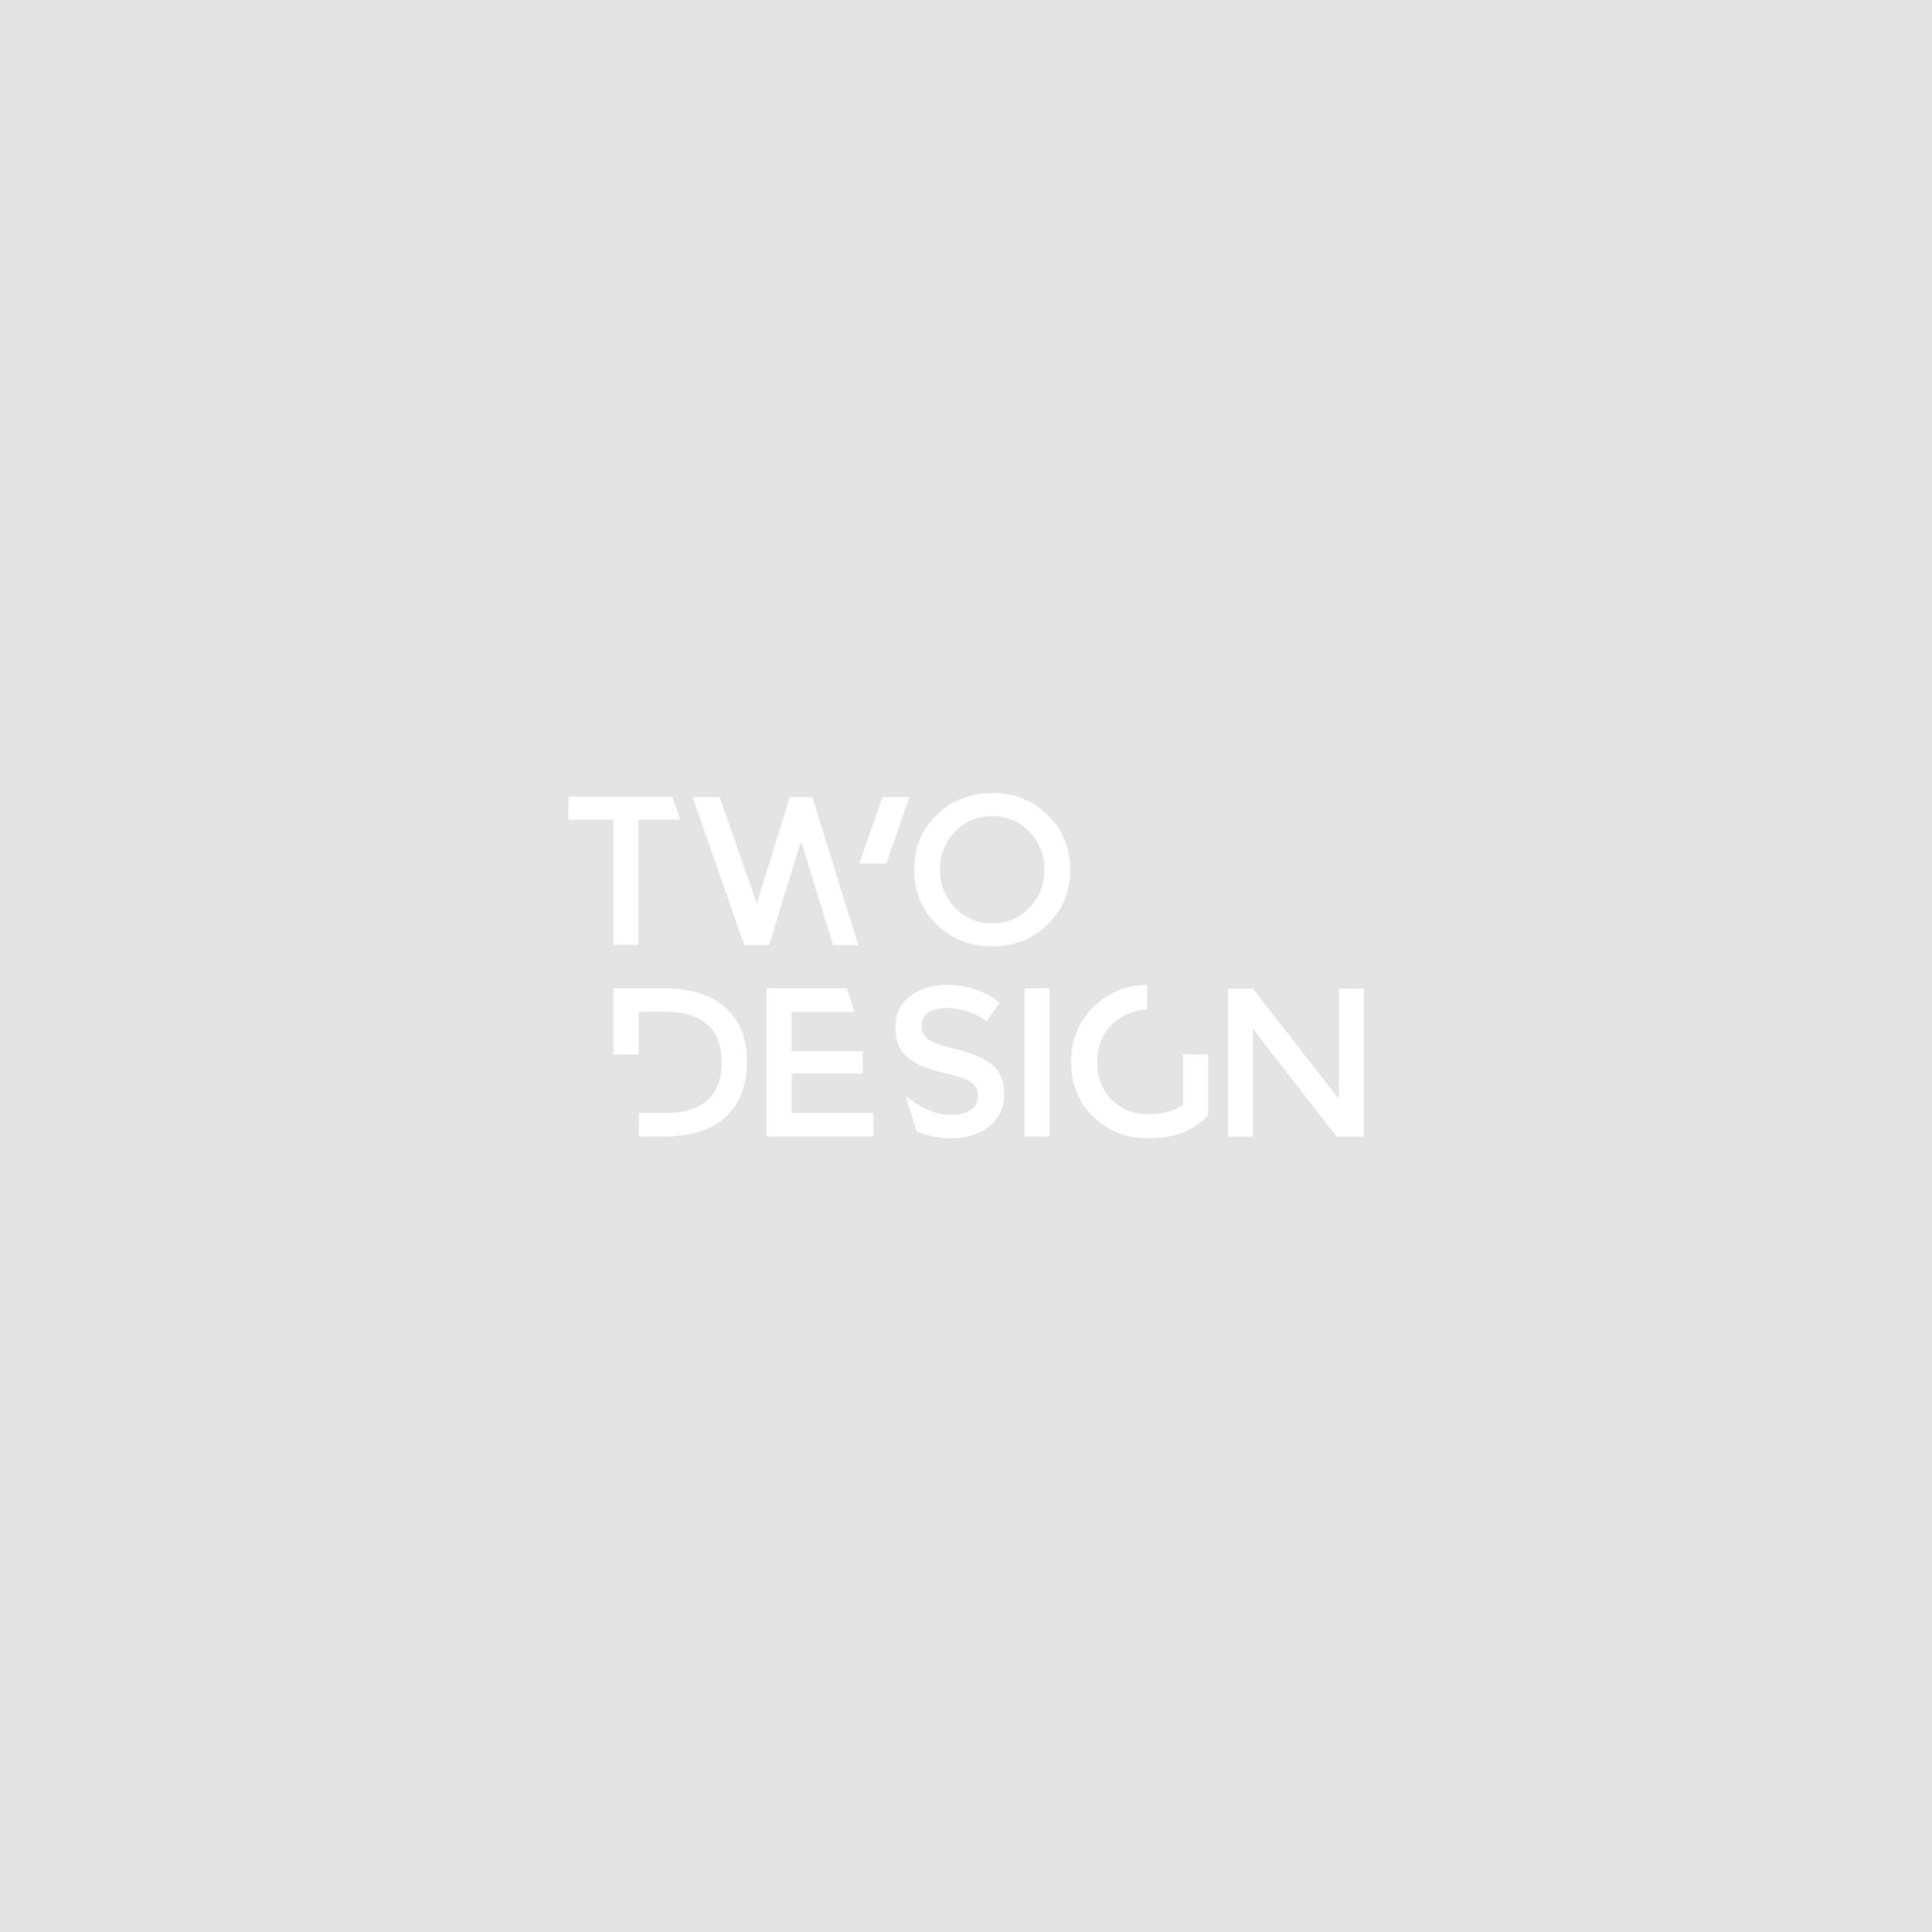 Two_design_placeholder 6.jpg